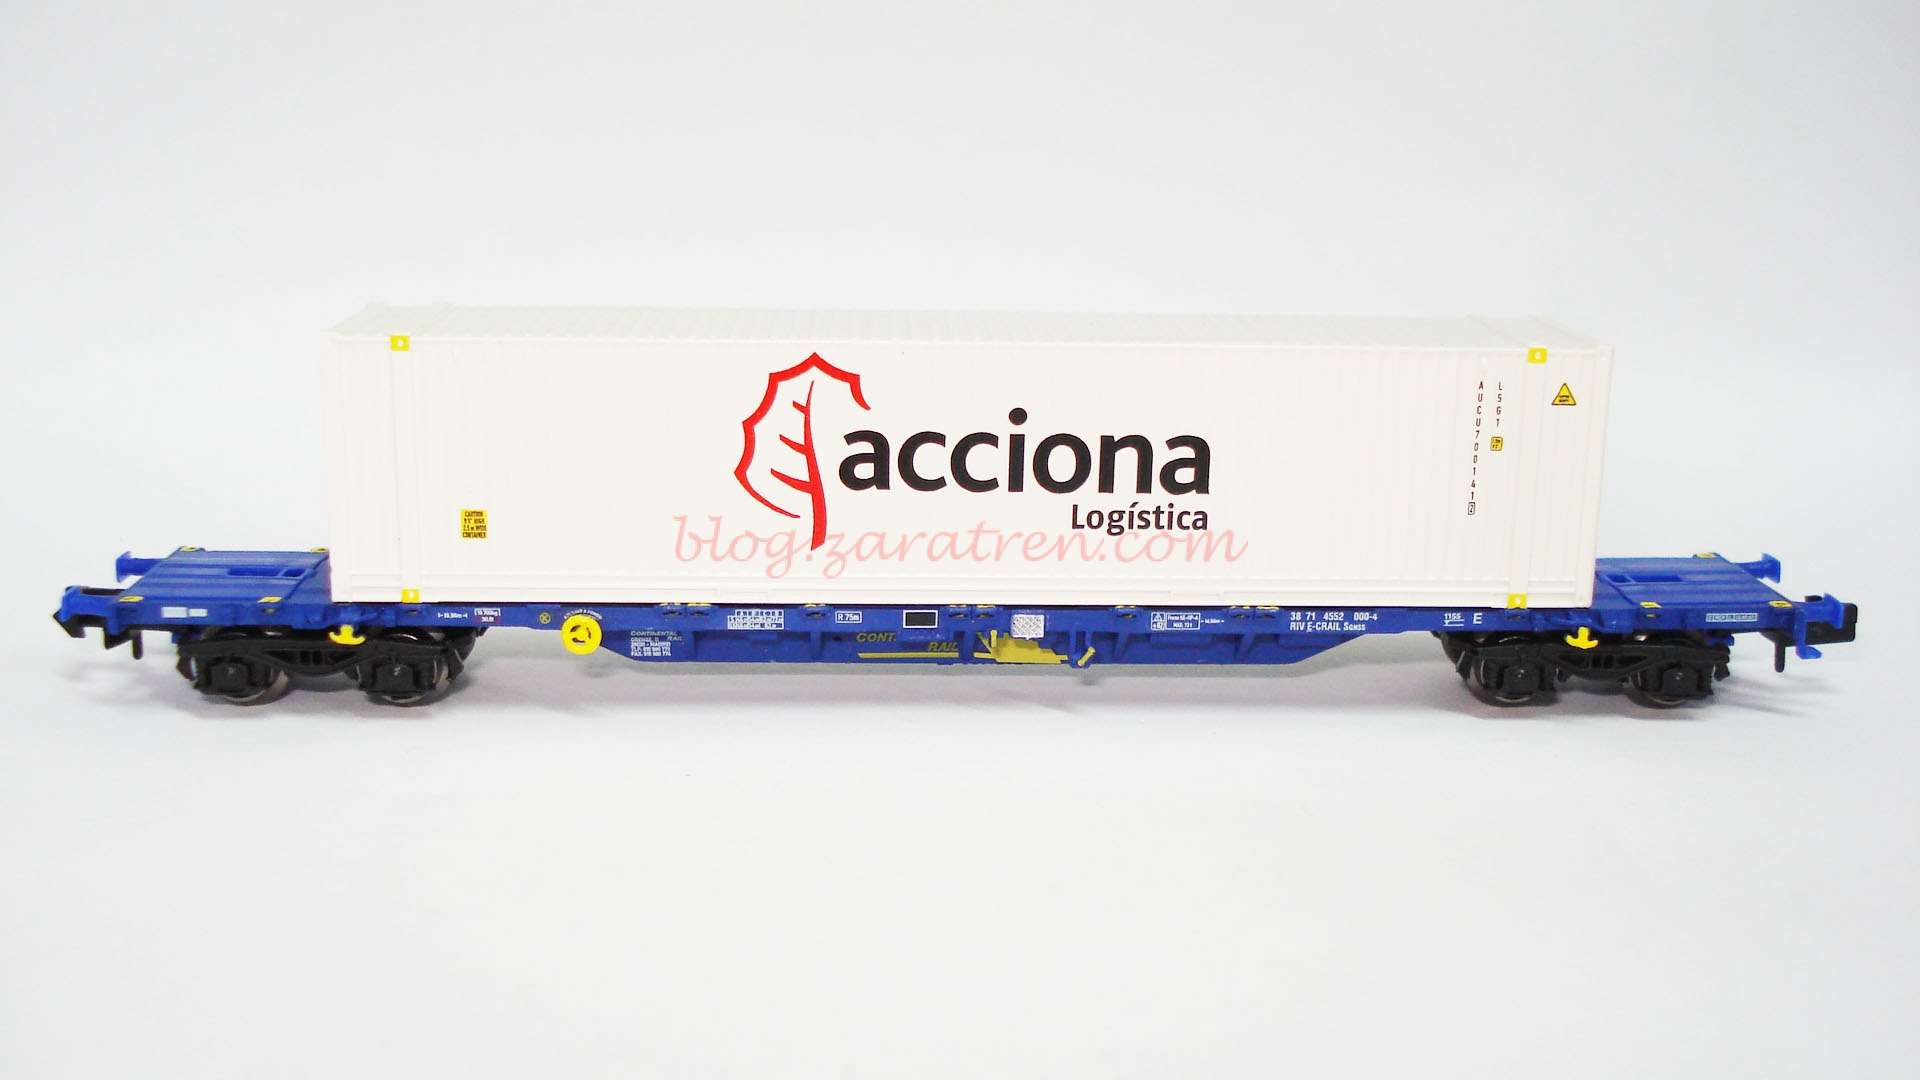 Arnold – Vagón Plataforma tipo Sgnss, Continental Rail, Color azul, Acciona, 45 pies, Escala N, Ref: HNS6547.